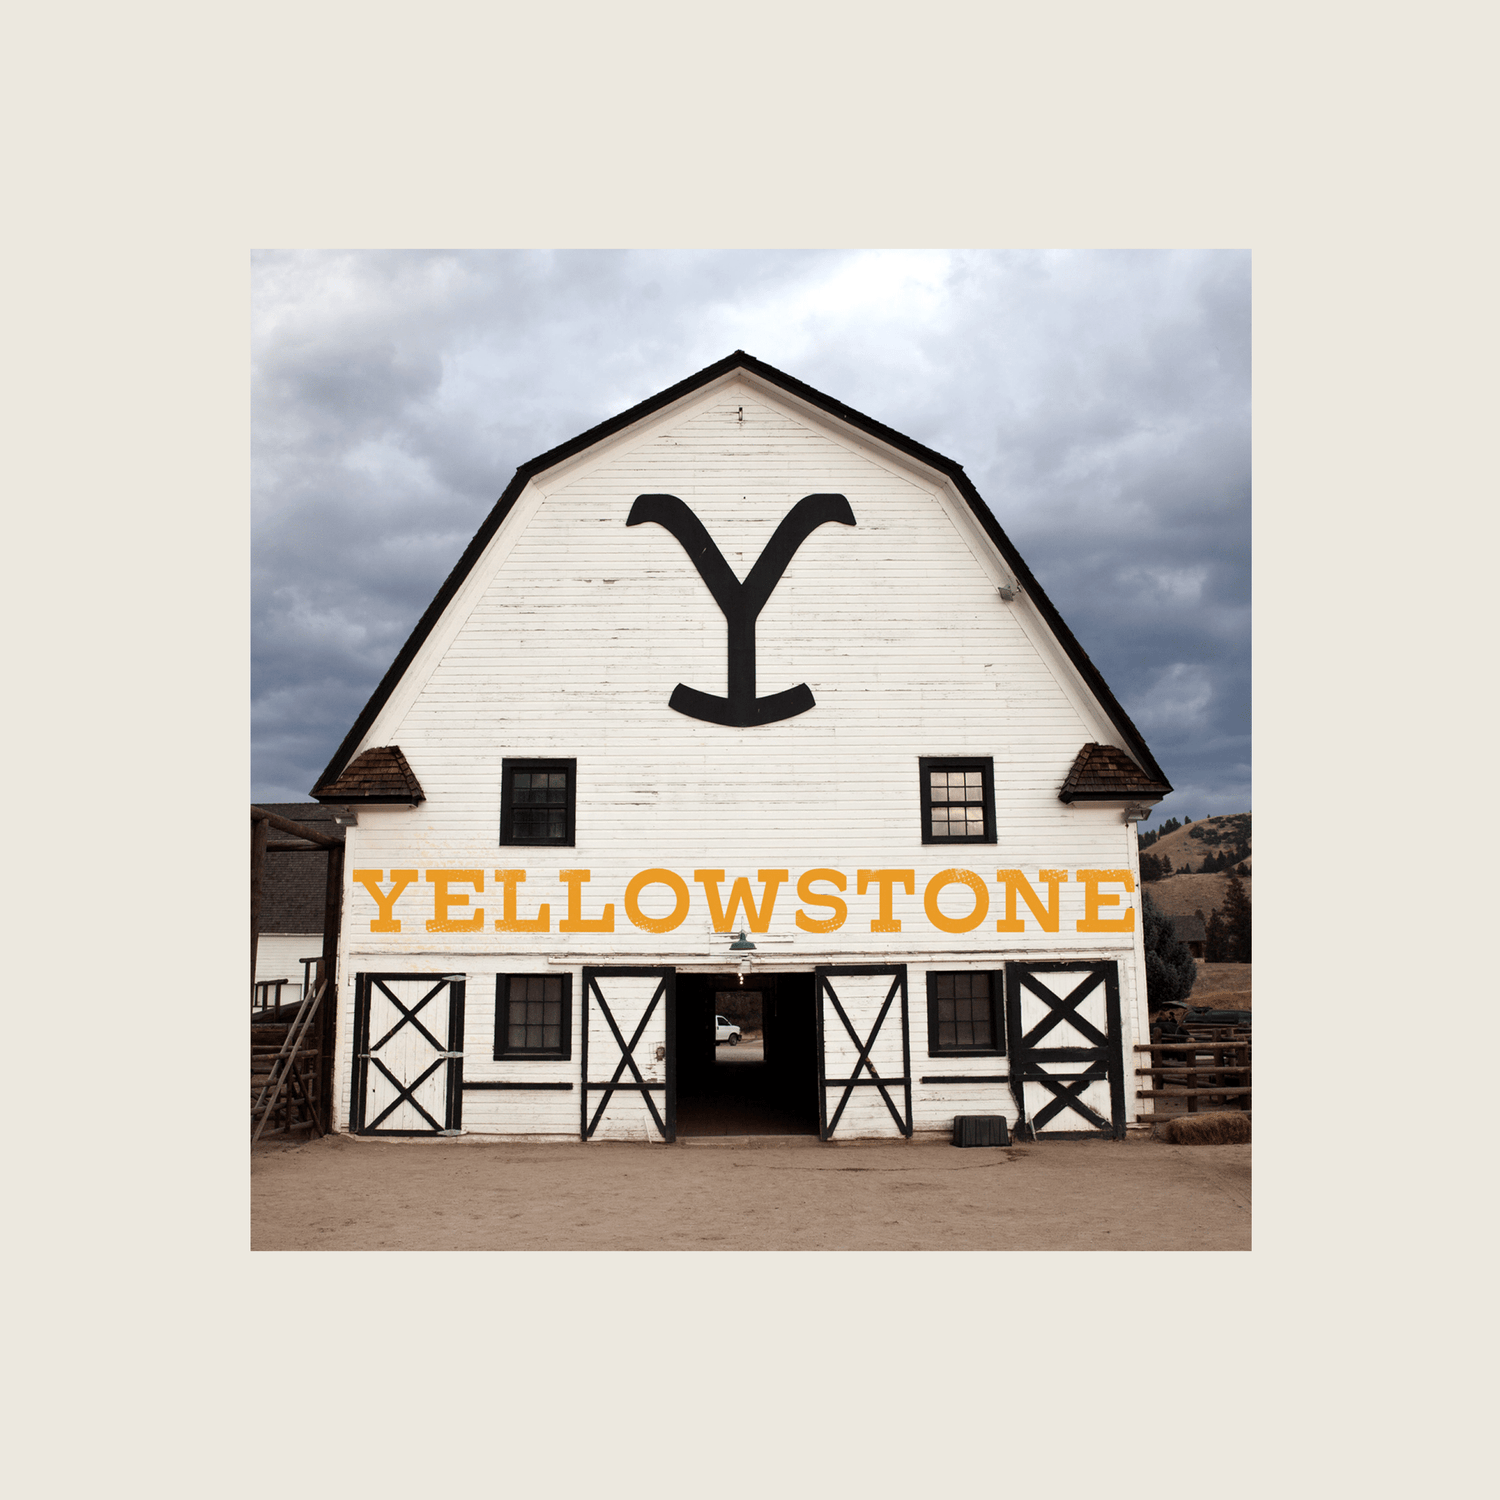 Yellowstone Barn Canvas - Paramount Shop